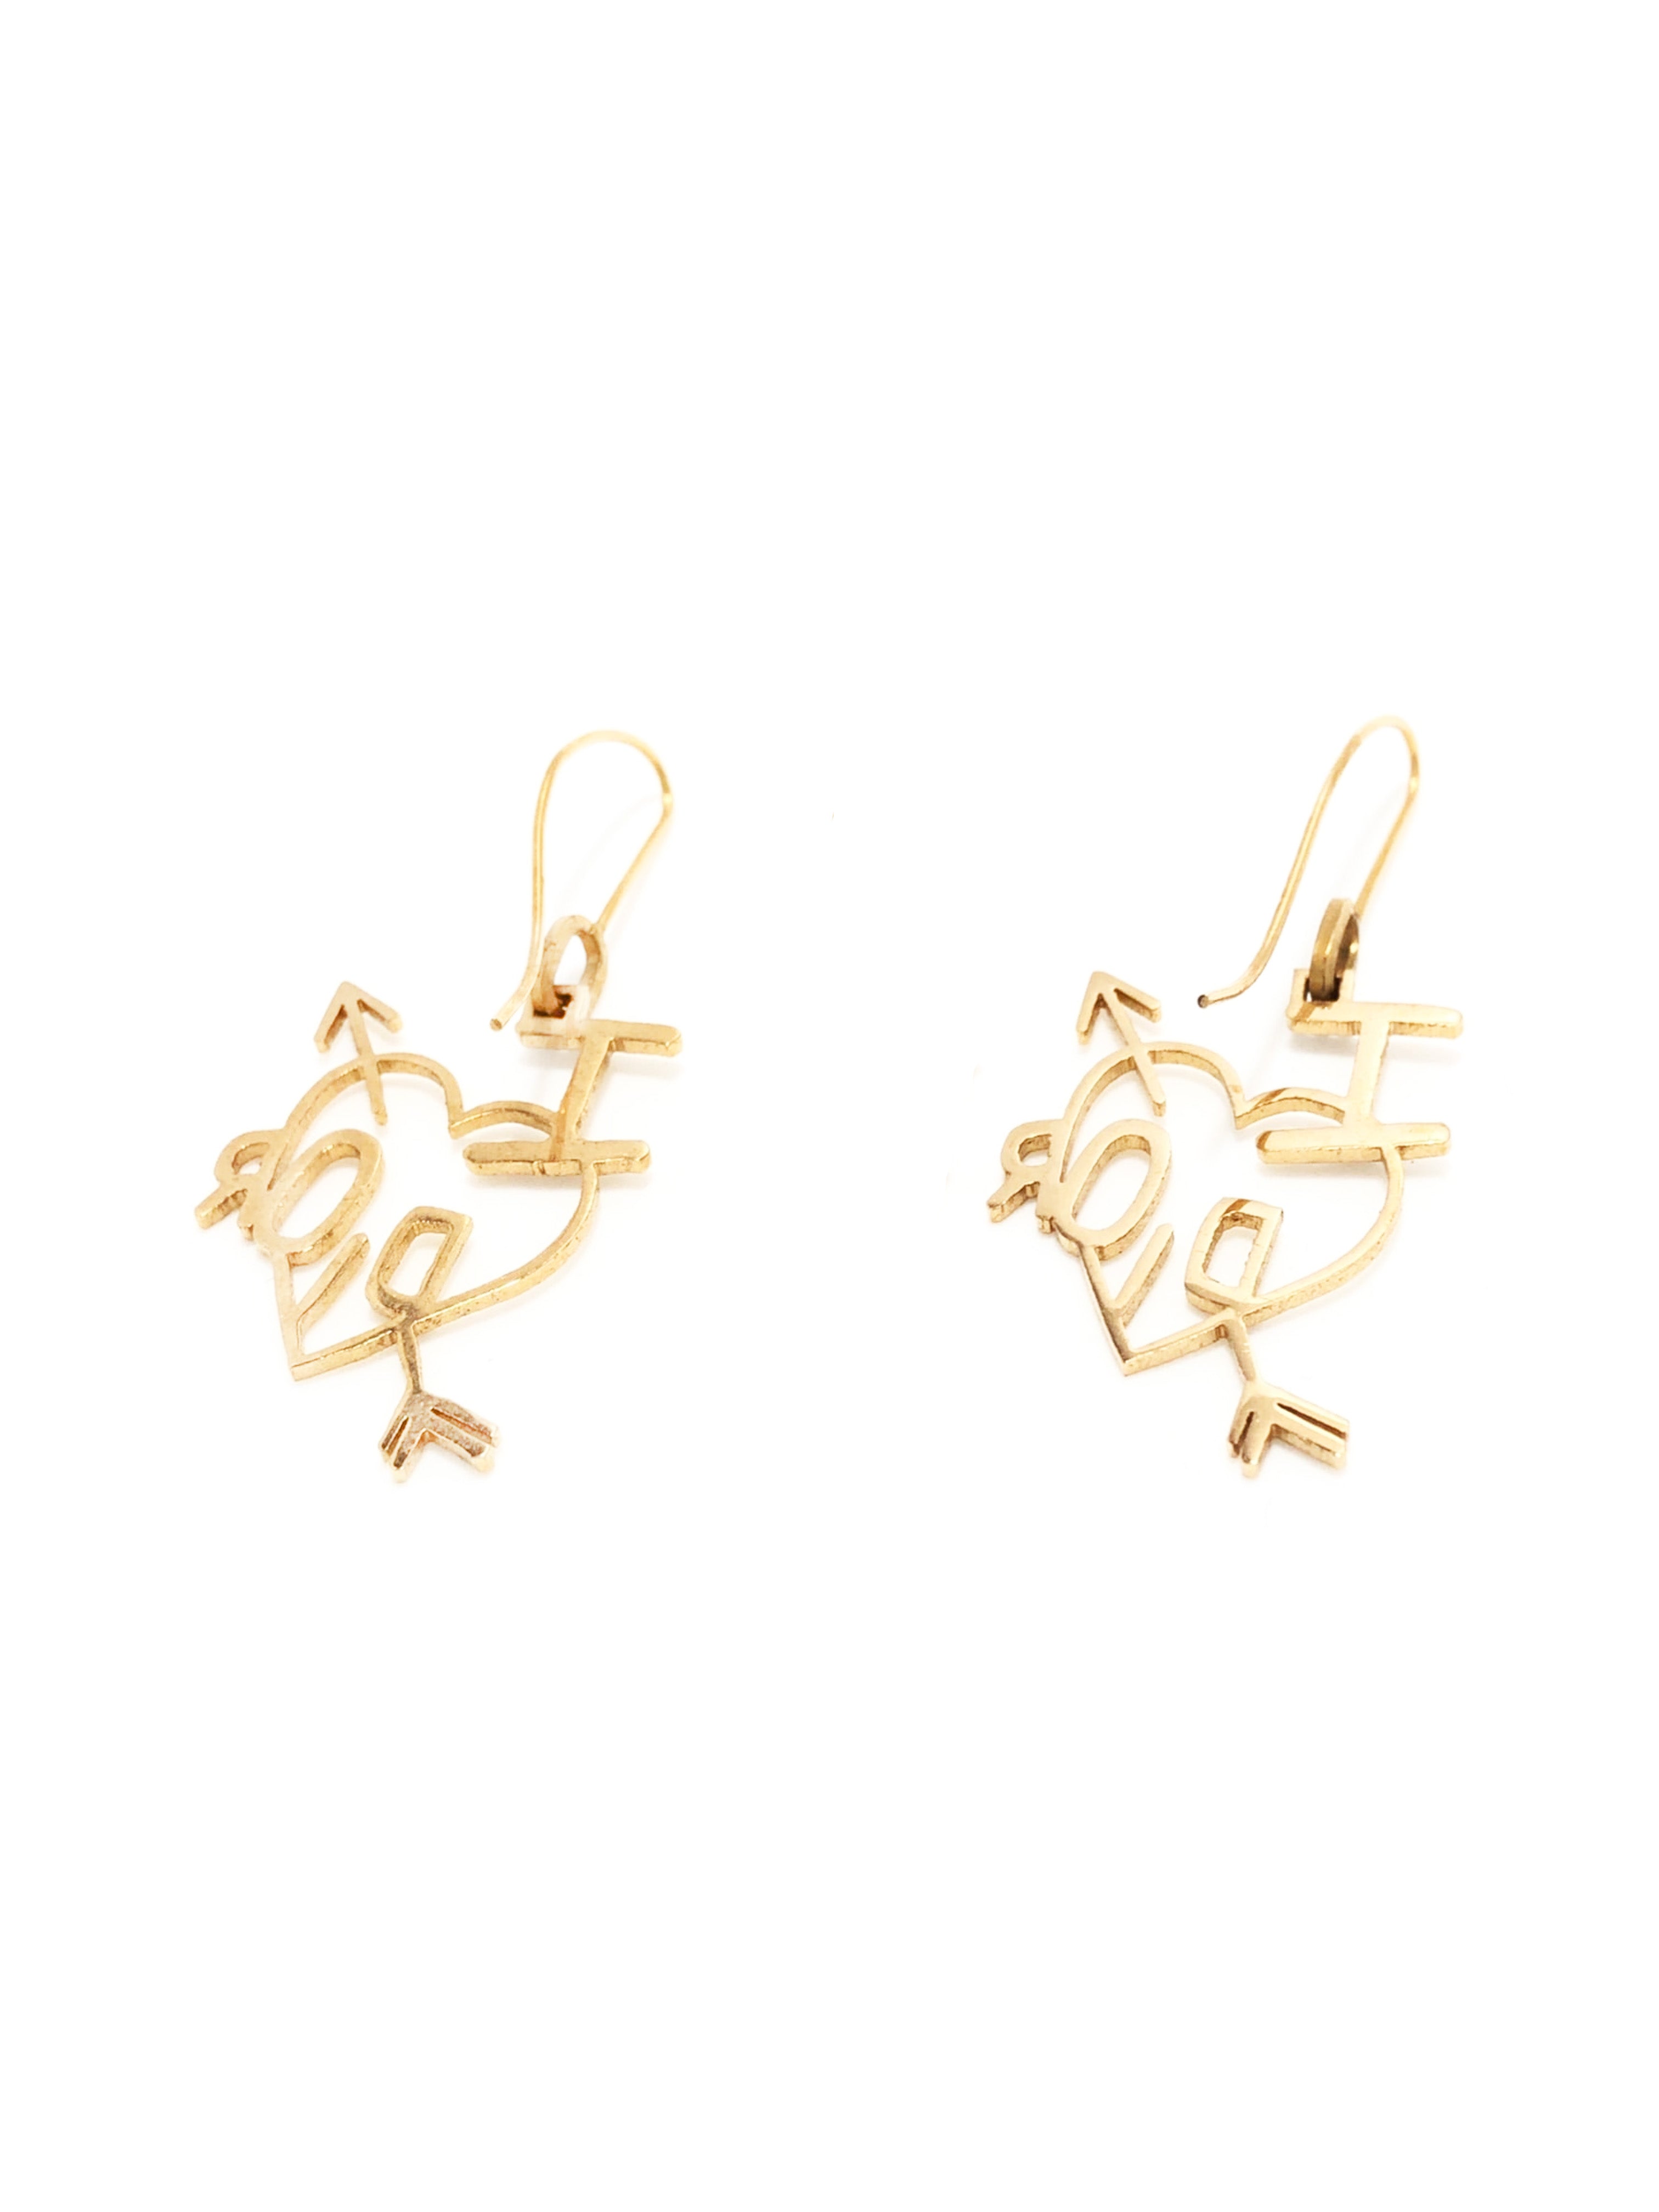 Christian Dior 2000s Gold Heart Earrings